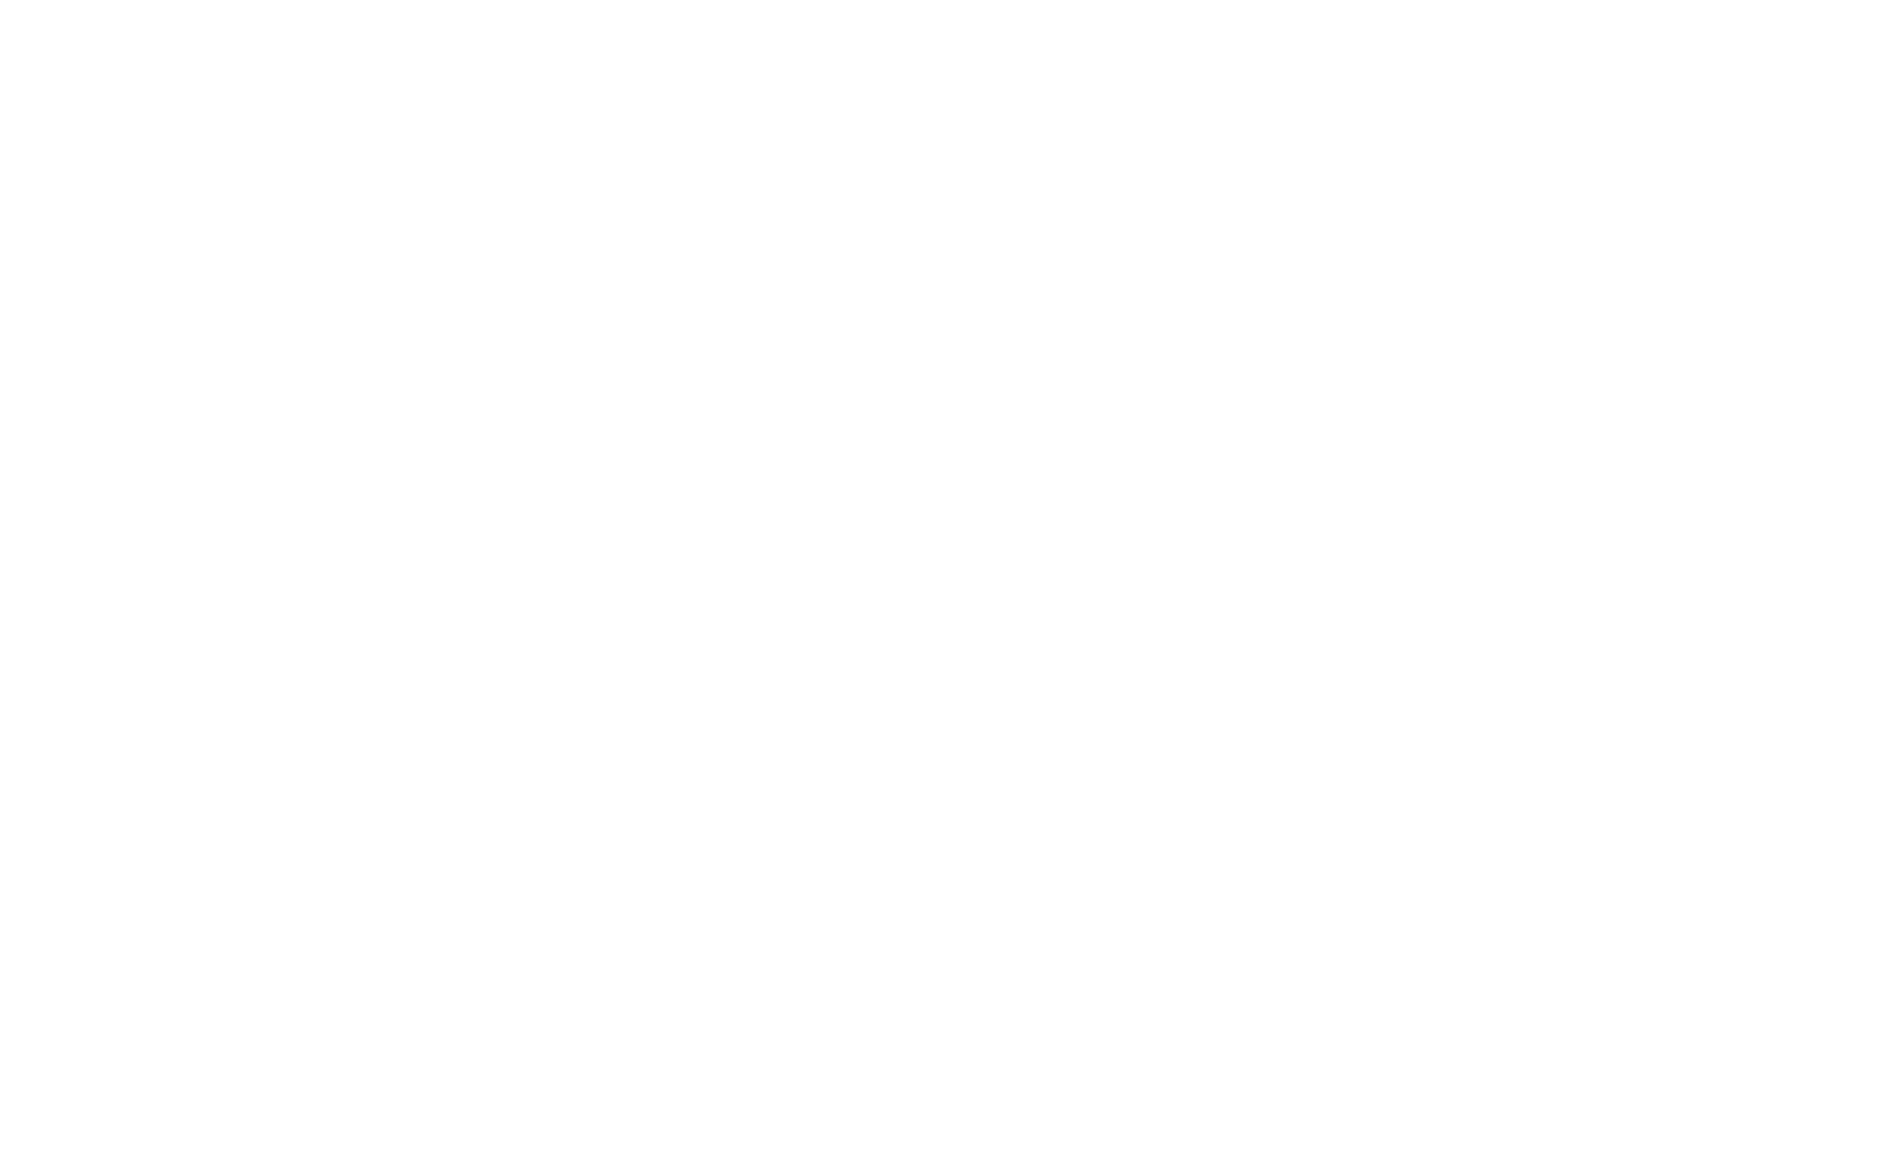 Global Lean